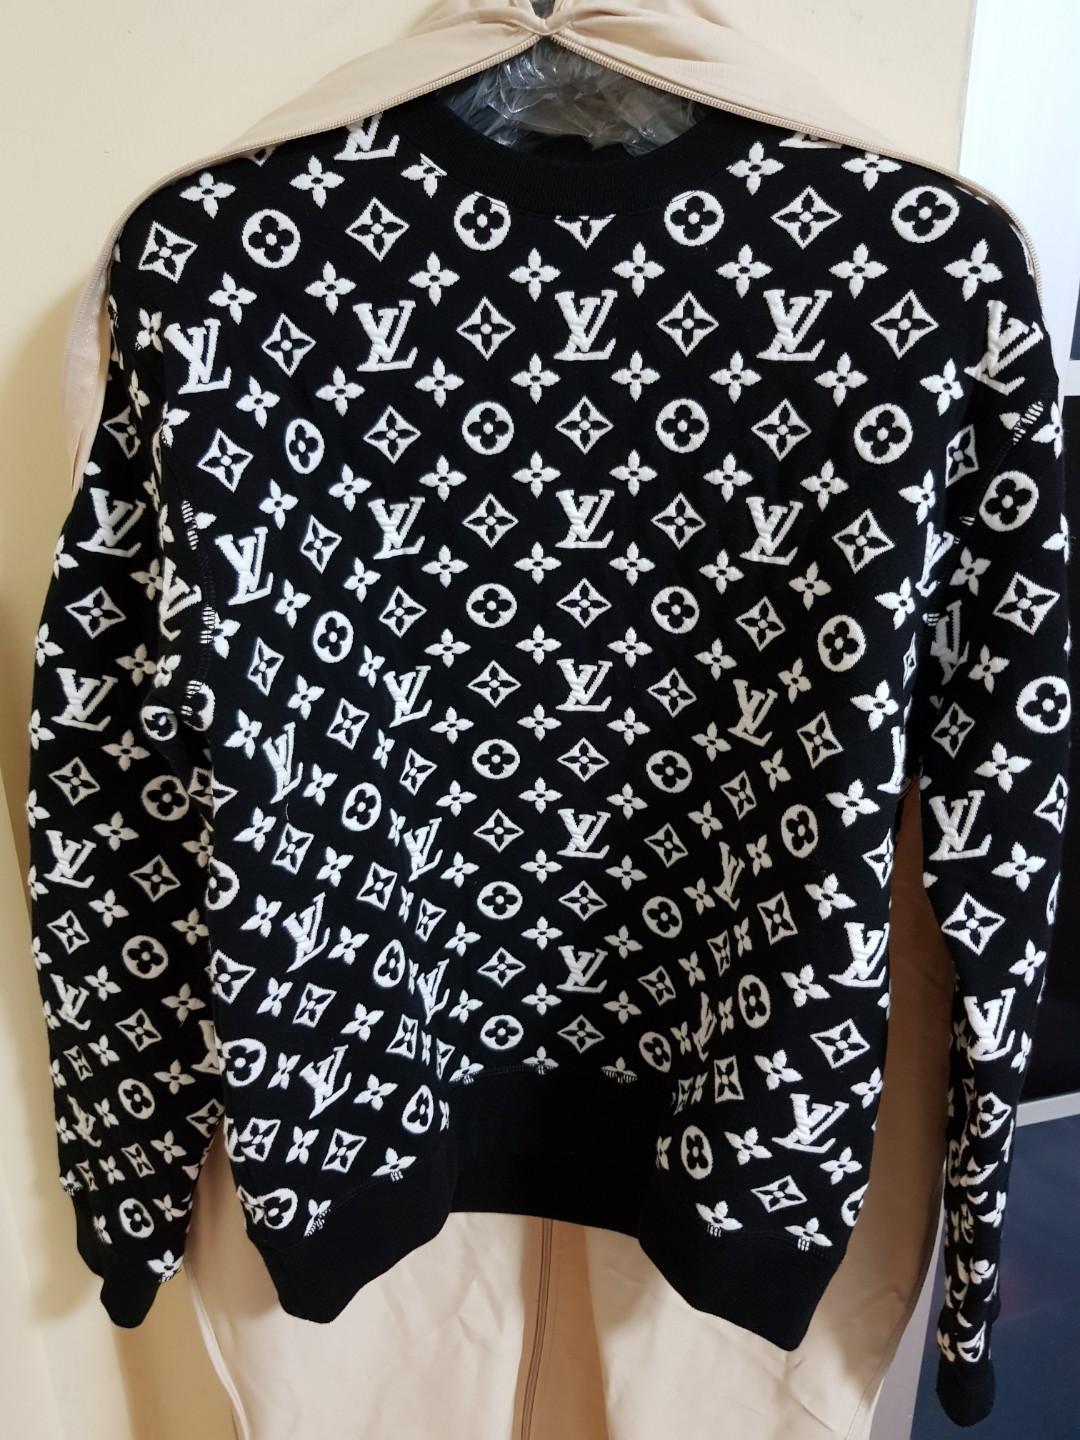 LV sweater